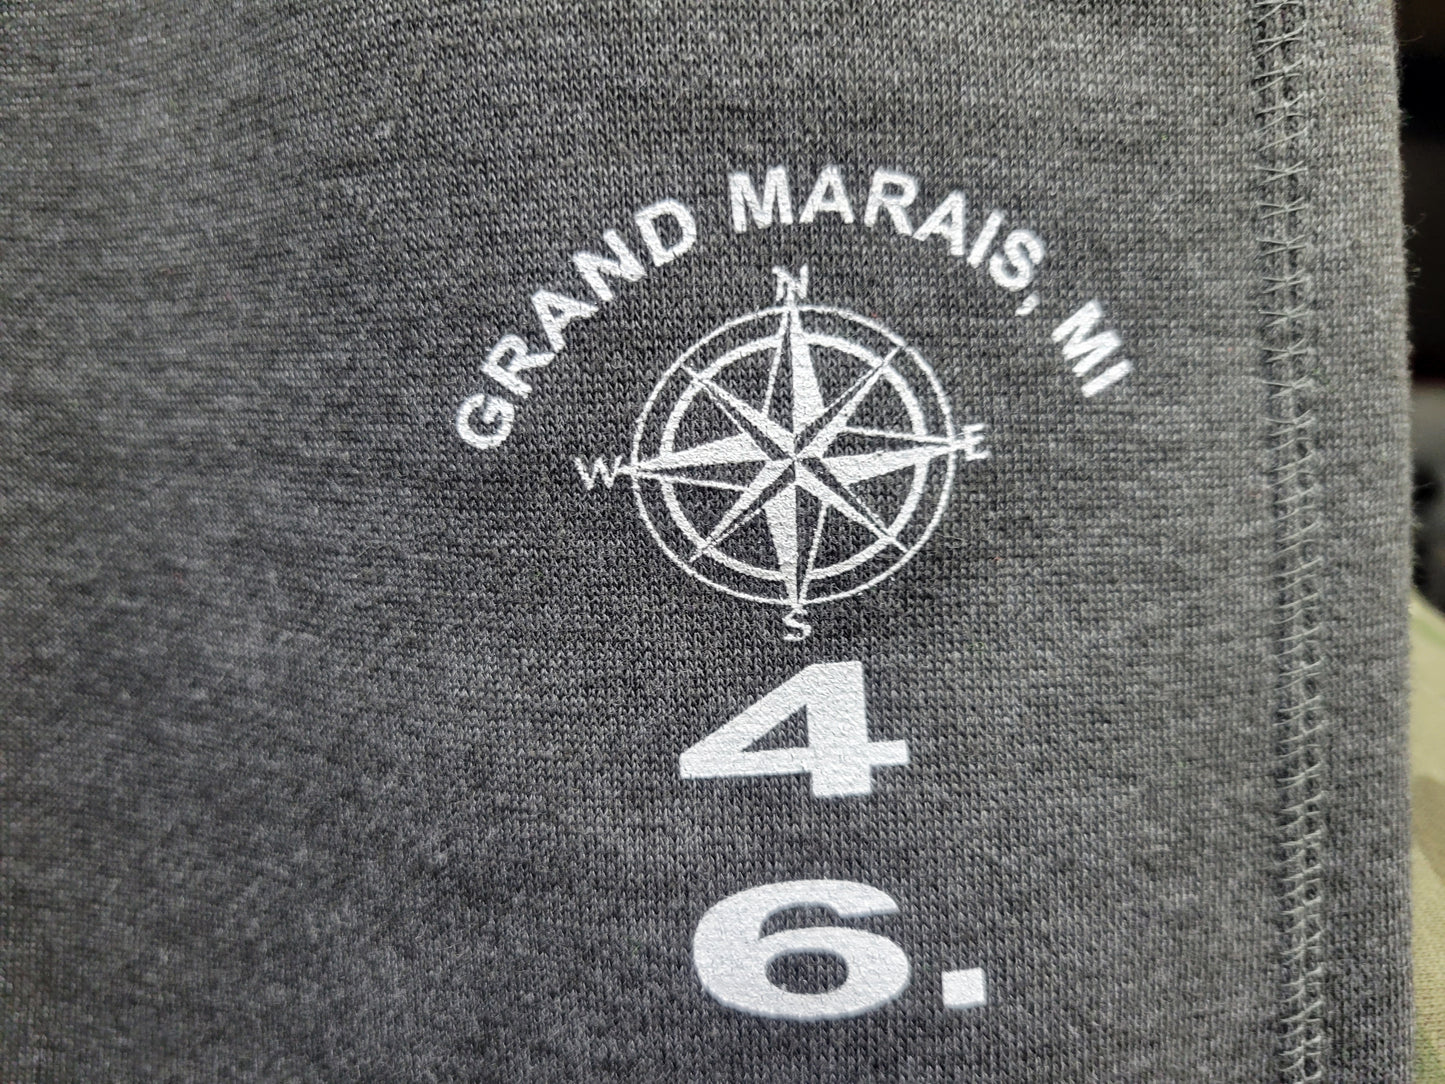 Grey sweat pants with GM coordinates